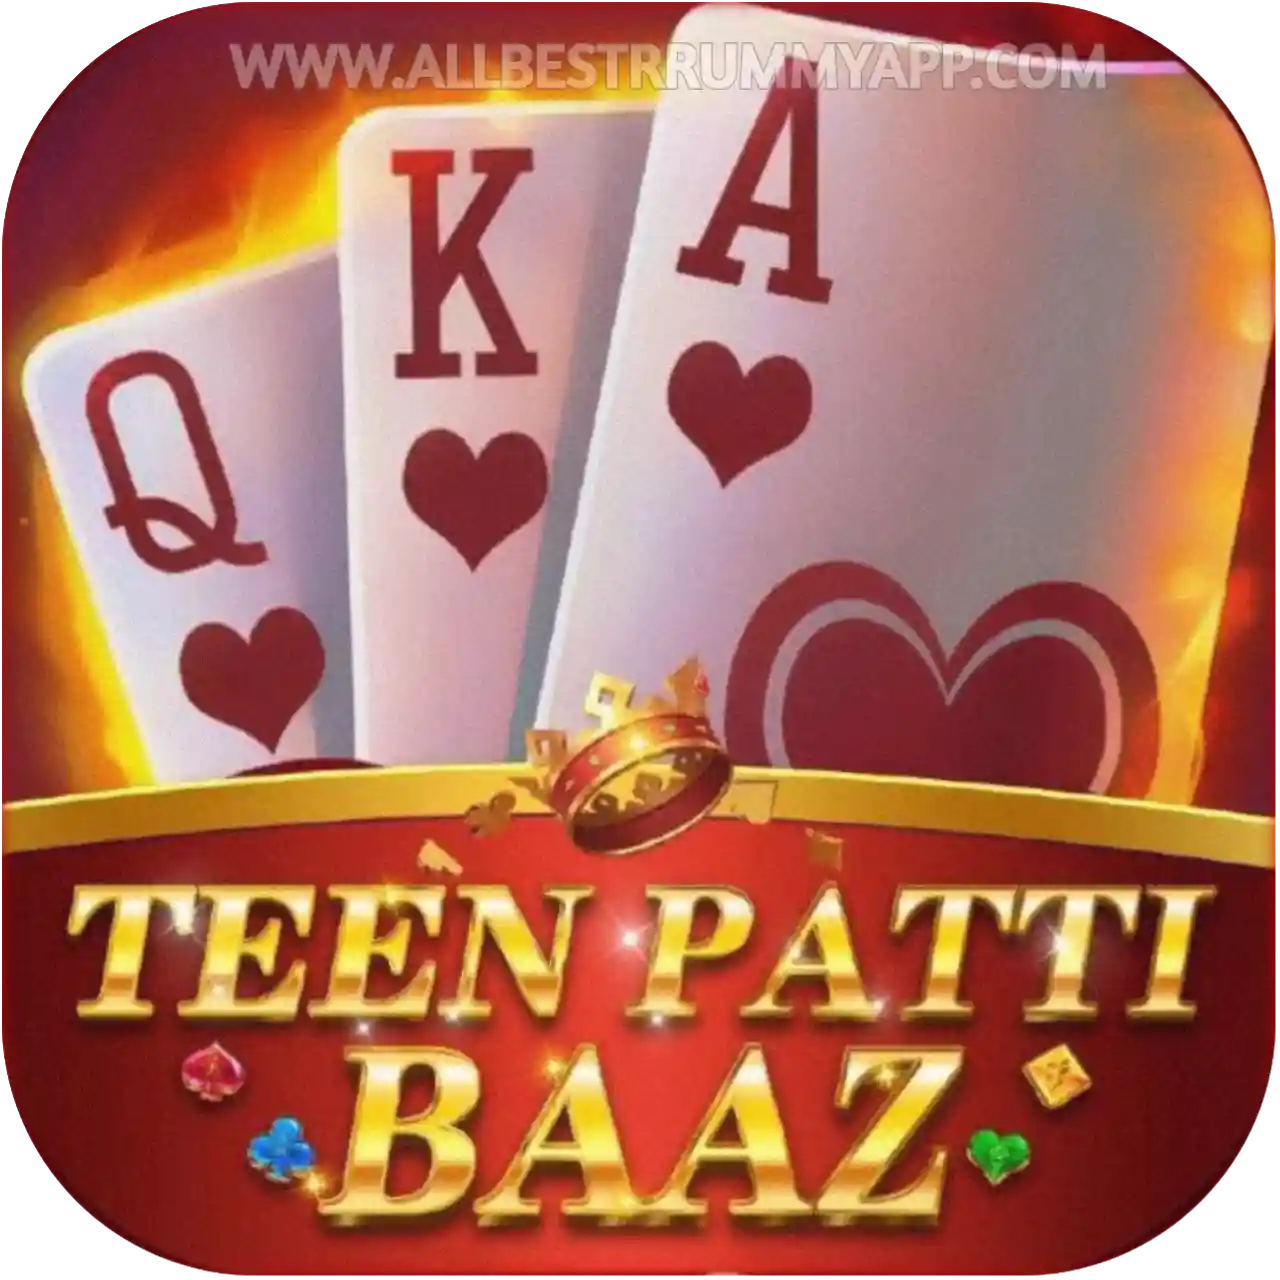 Teen Patti Baaz - All Best Rummy App